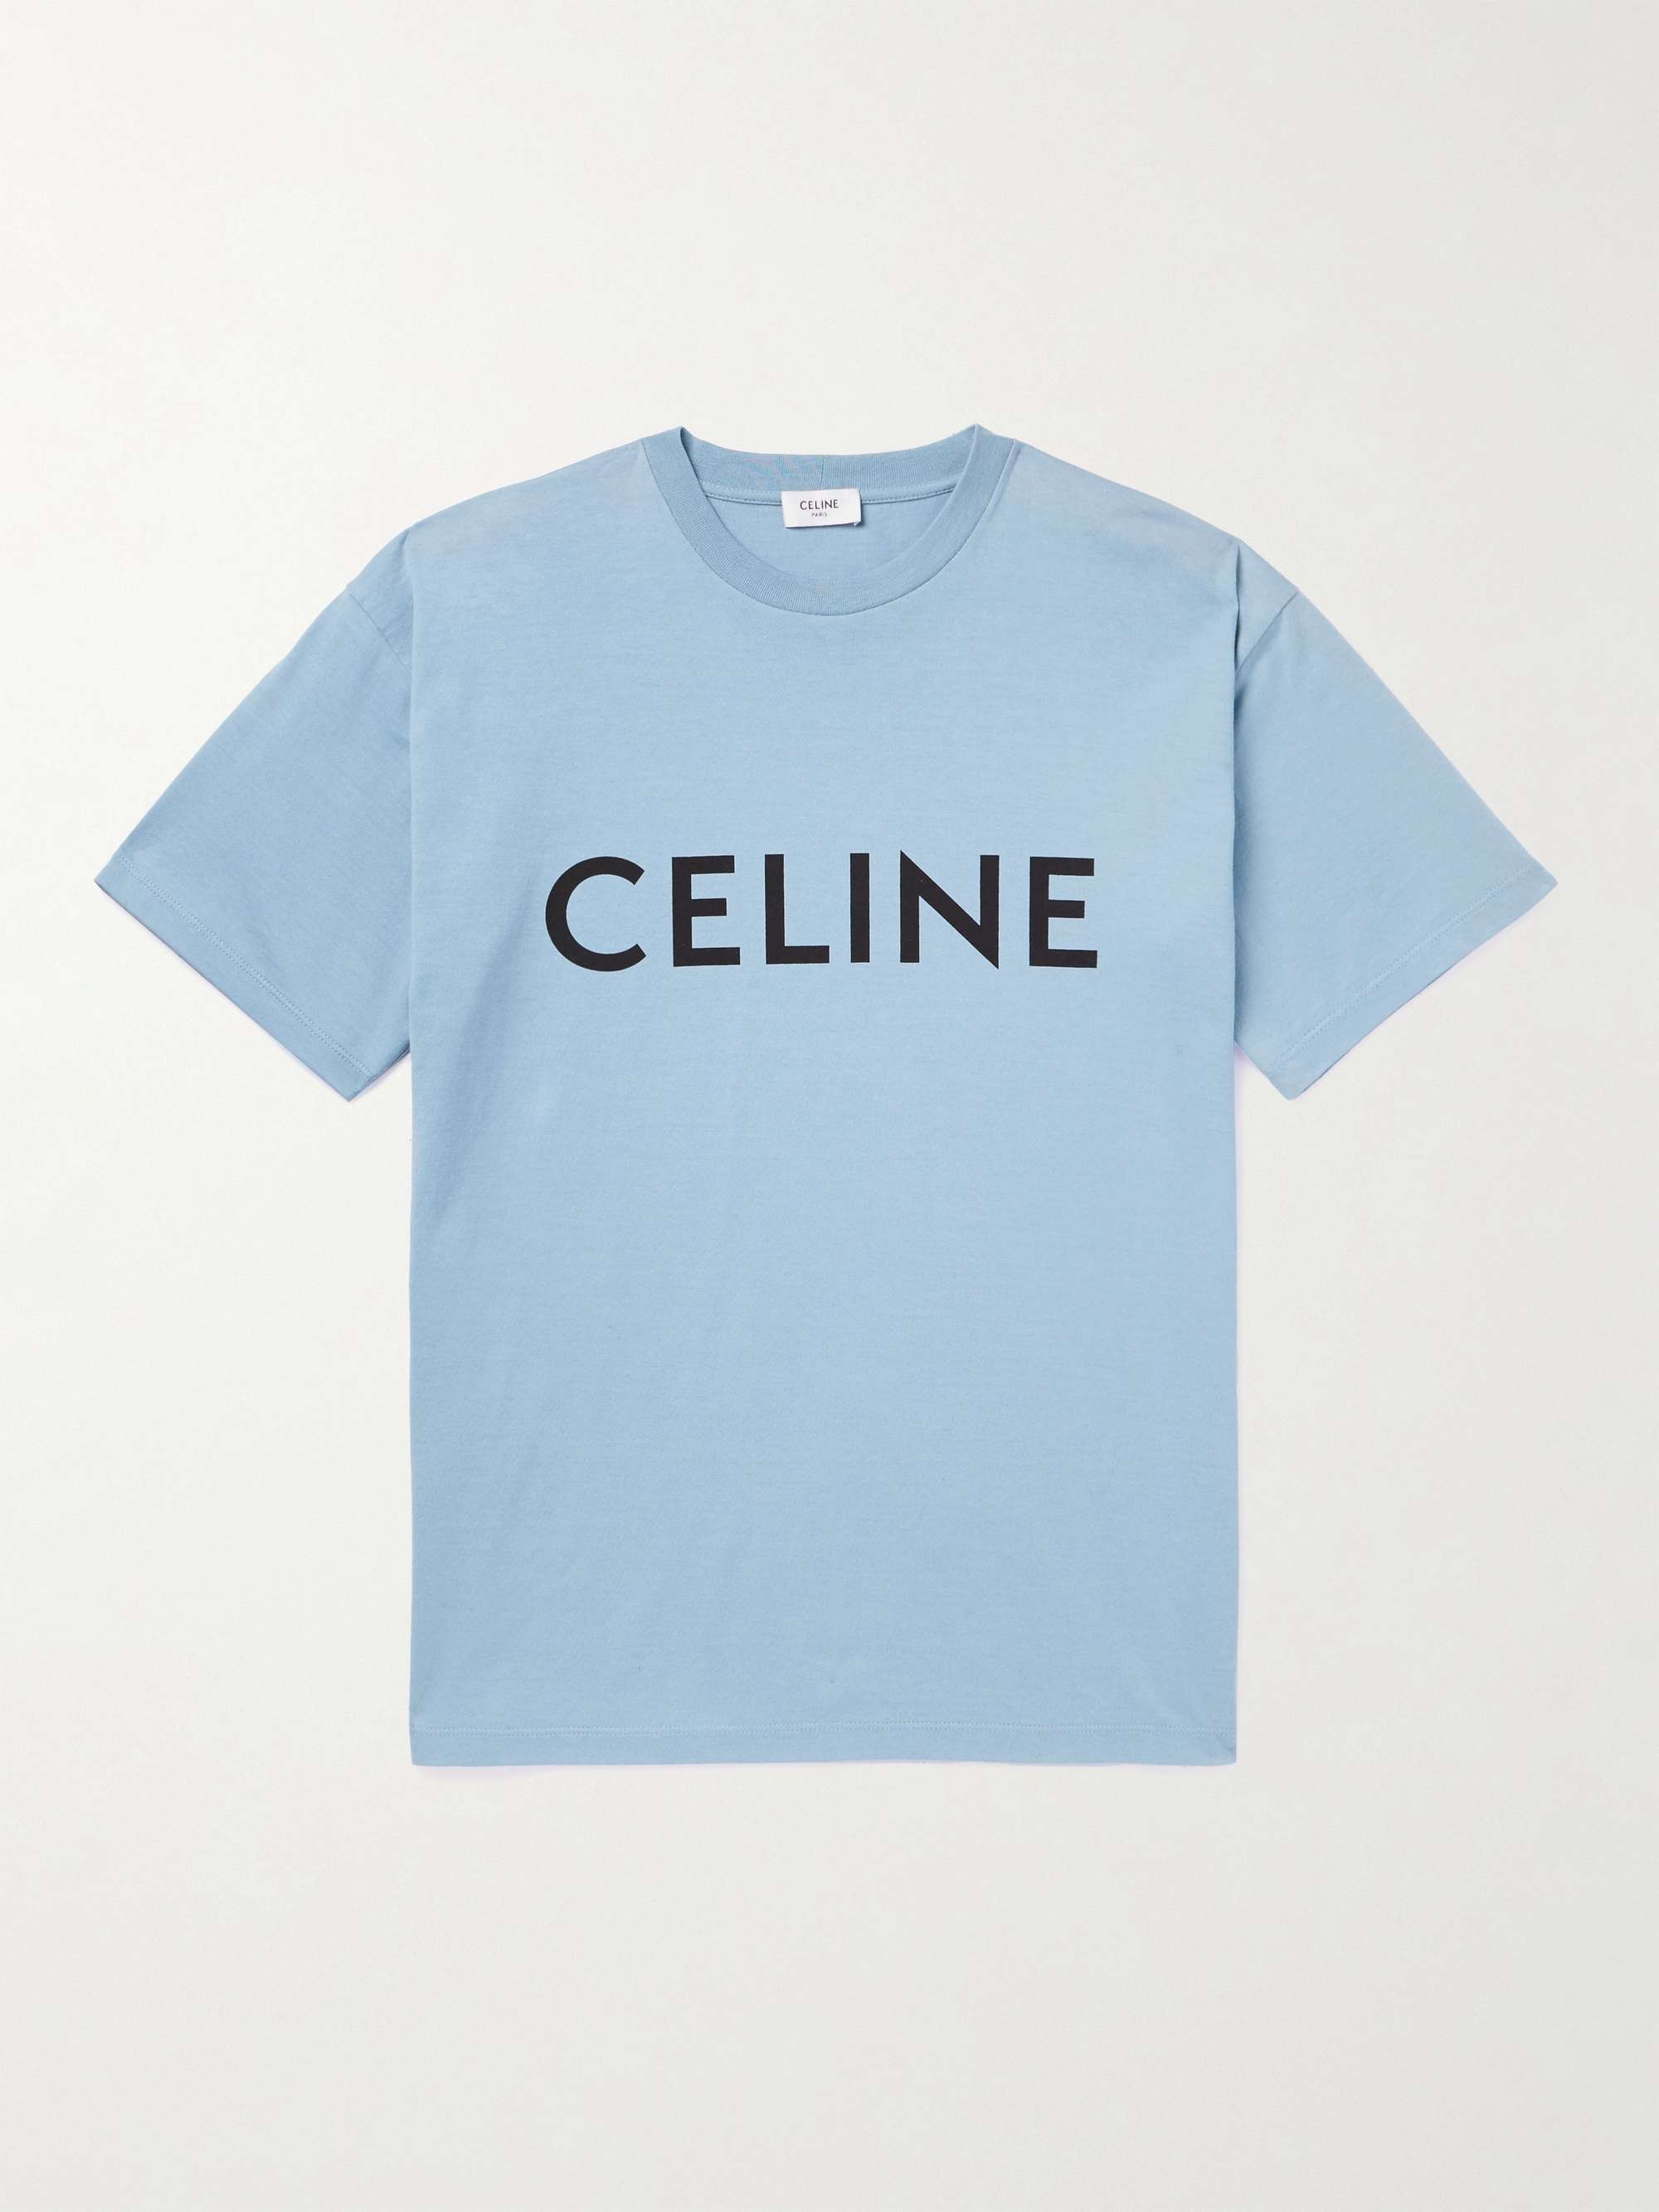 CELINE HOMME Logo-Print Cotton-Jersey T-Shirt for Men